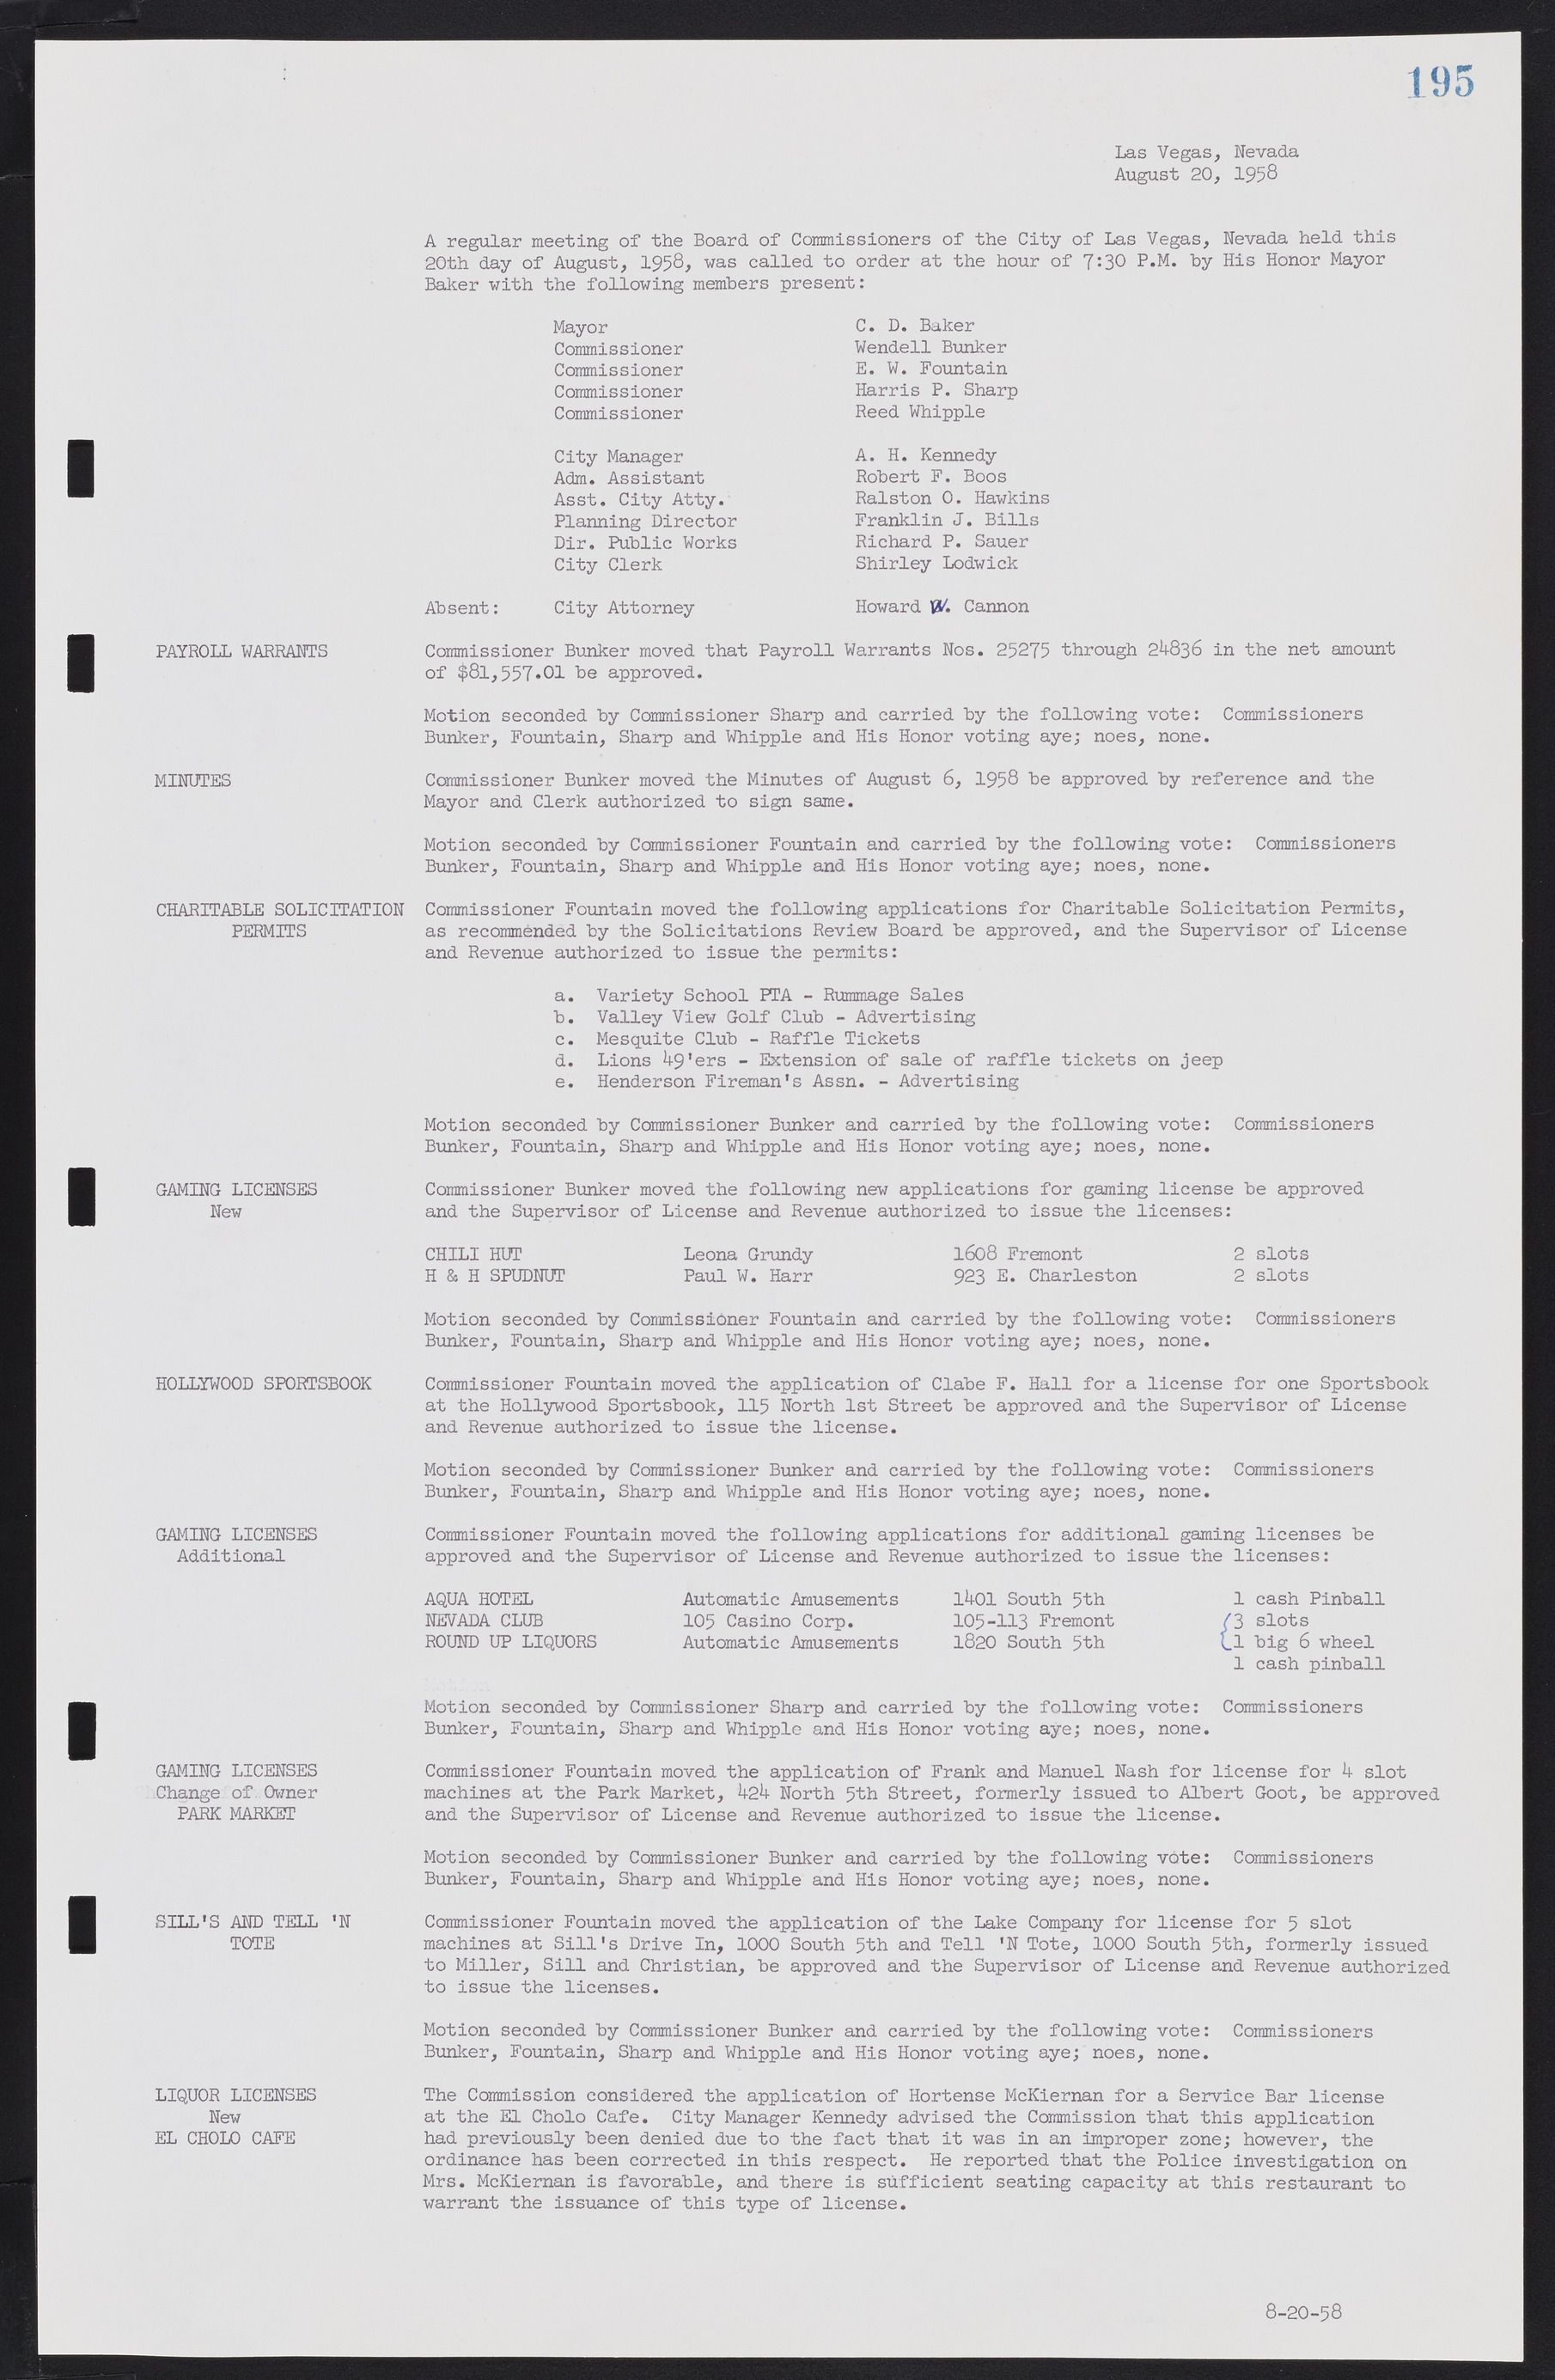 Las Vegas City Commission Minutes, November 20, 1957 to December 2, 1959, lvc000011-199